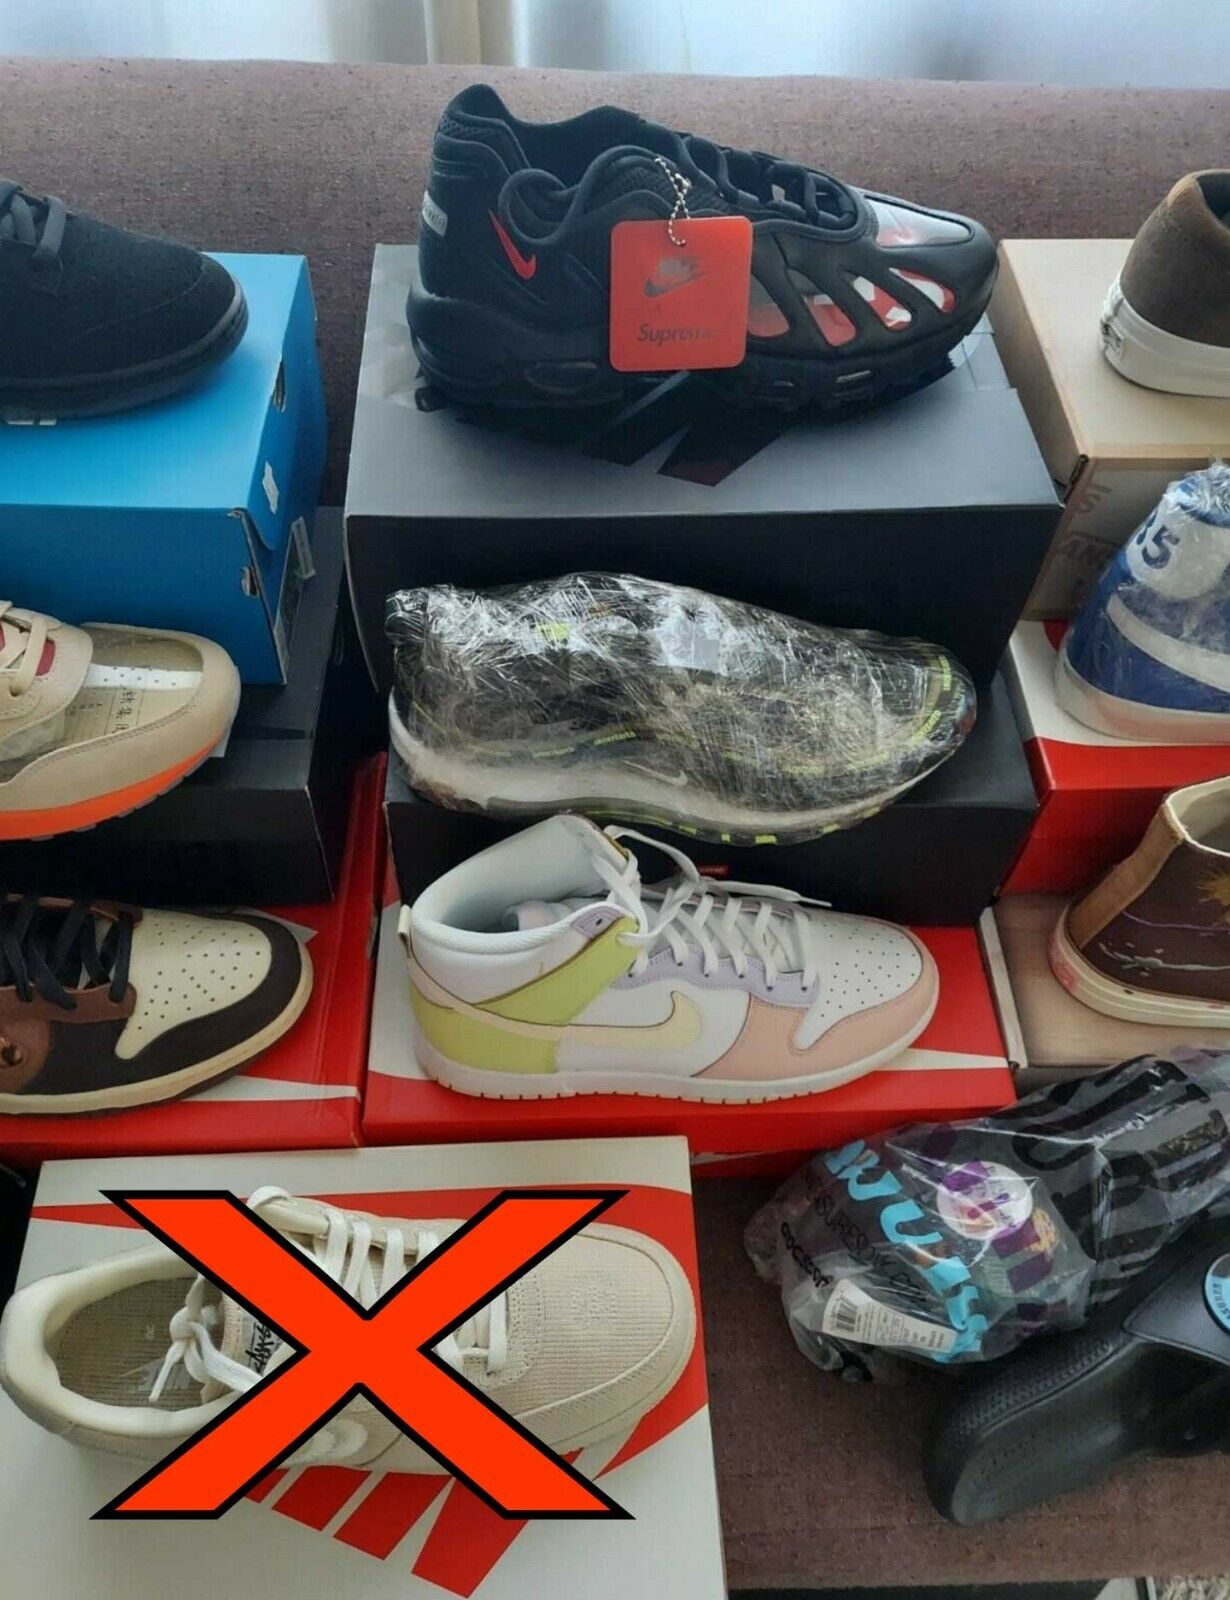 Jordan Nike Sacai Dunk Supreme Clot Kaws DS Sneaker Lot Size 10 Bundle Bulk Deal Nike Air Jordan Retro - фотография #6